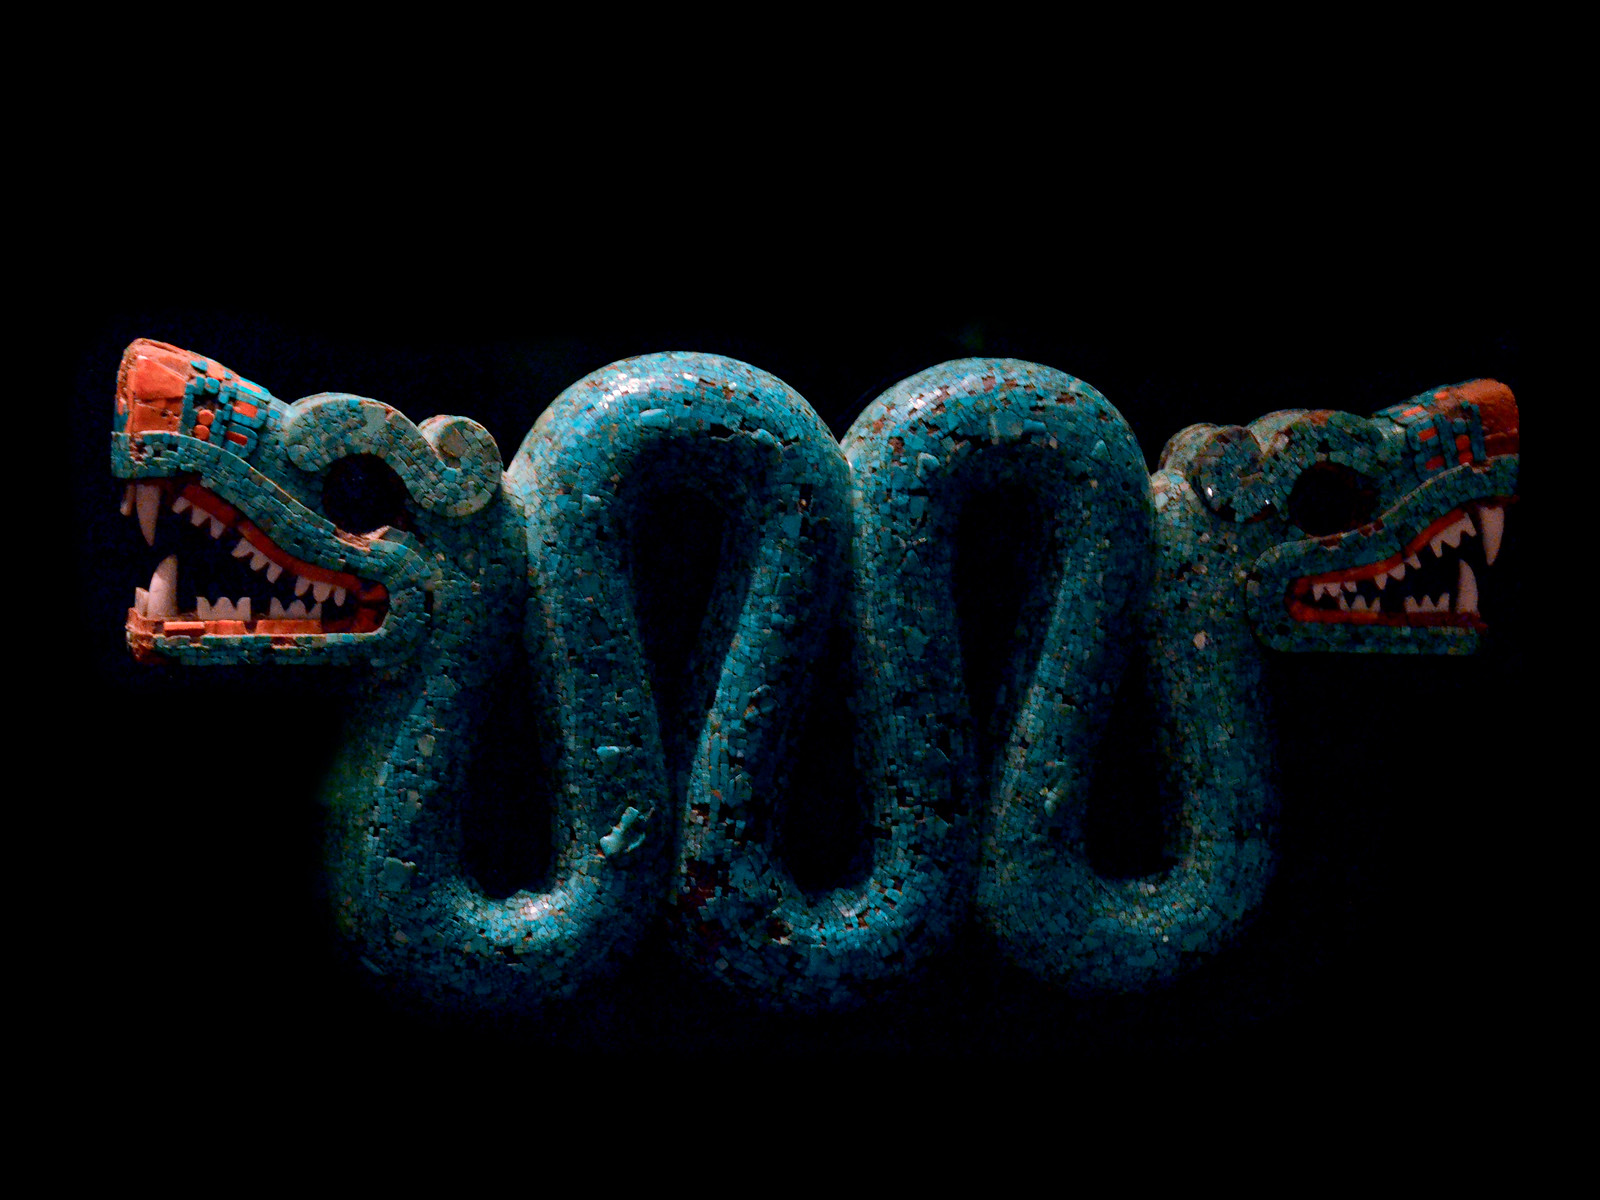 “Two-Headed Snake” © Hans Hillewaert; Creative Commons license